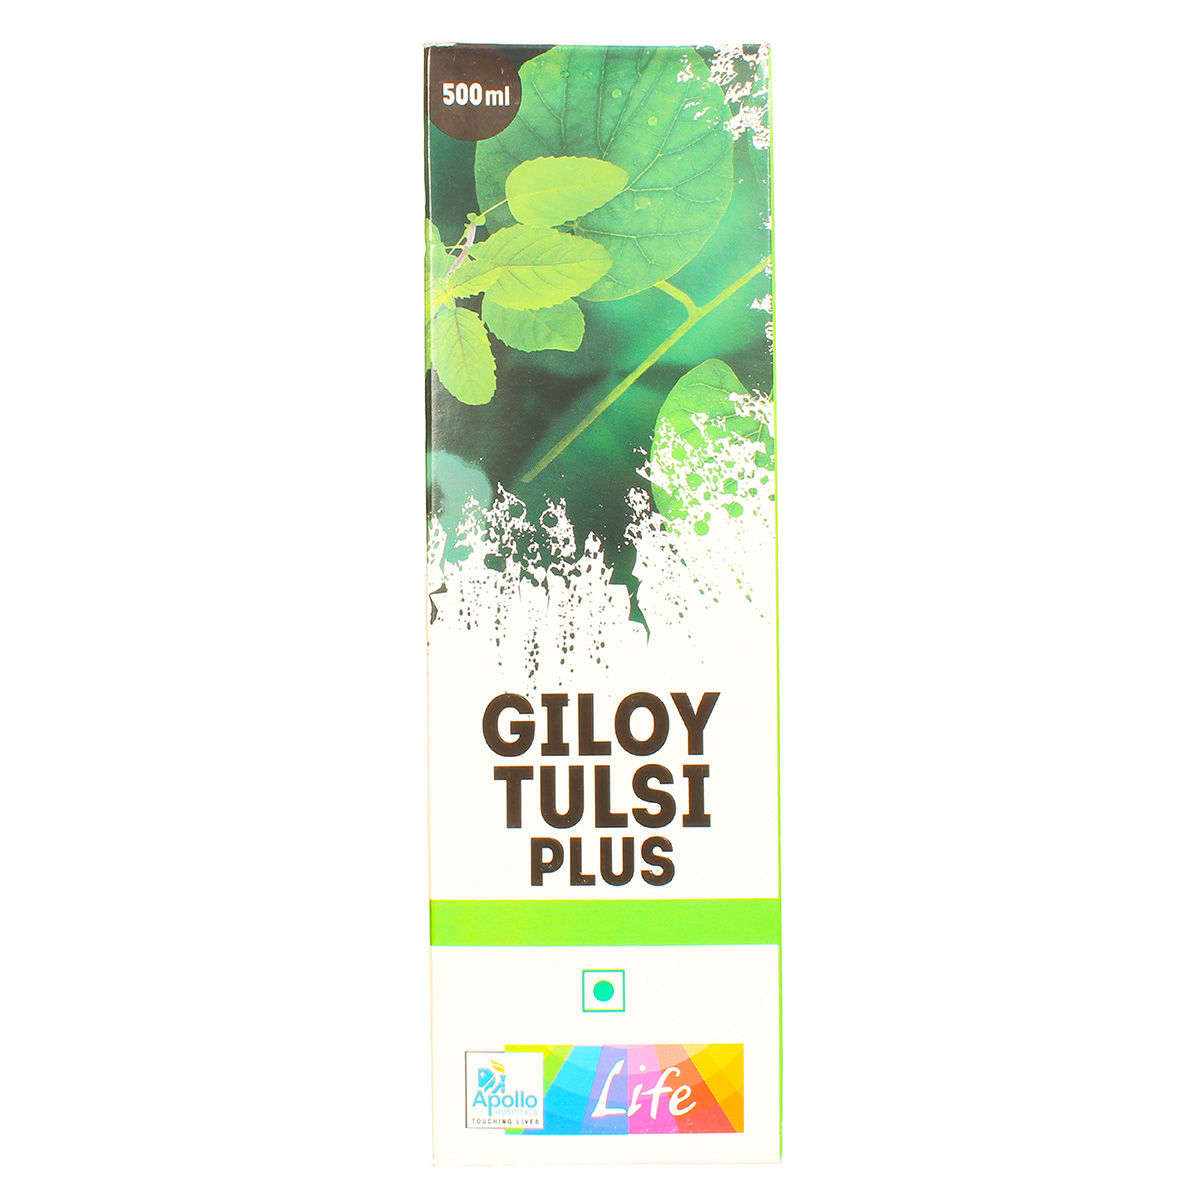 Apollo Life Giloy Tulsi Plus Juice, 500 ml, Pack of 1 